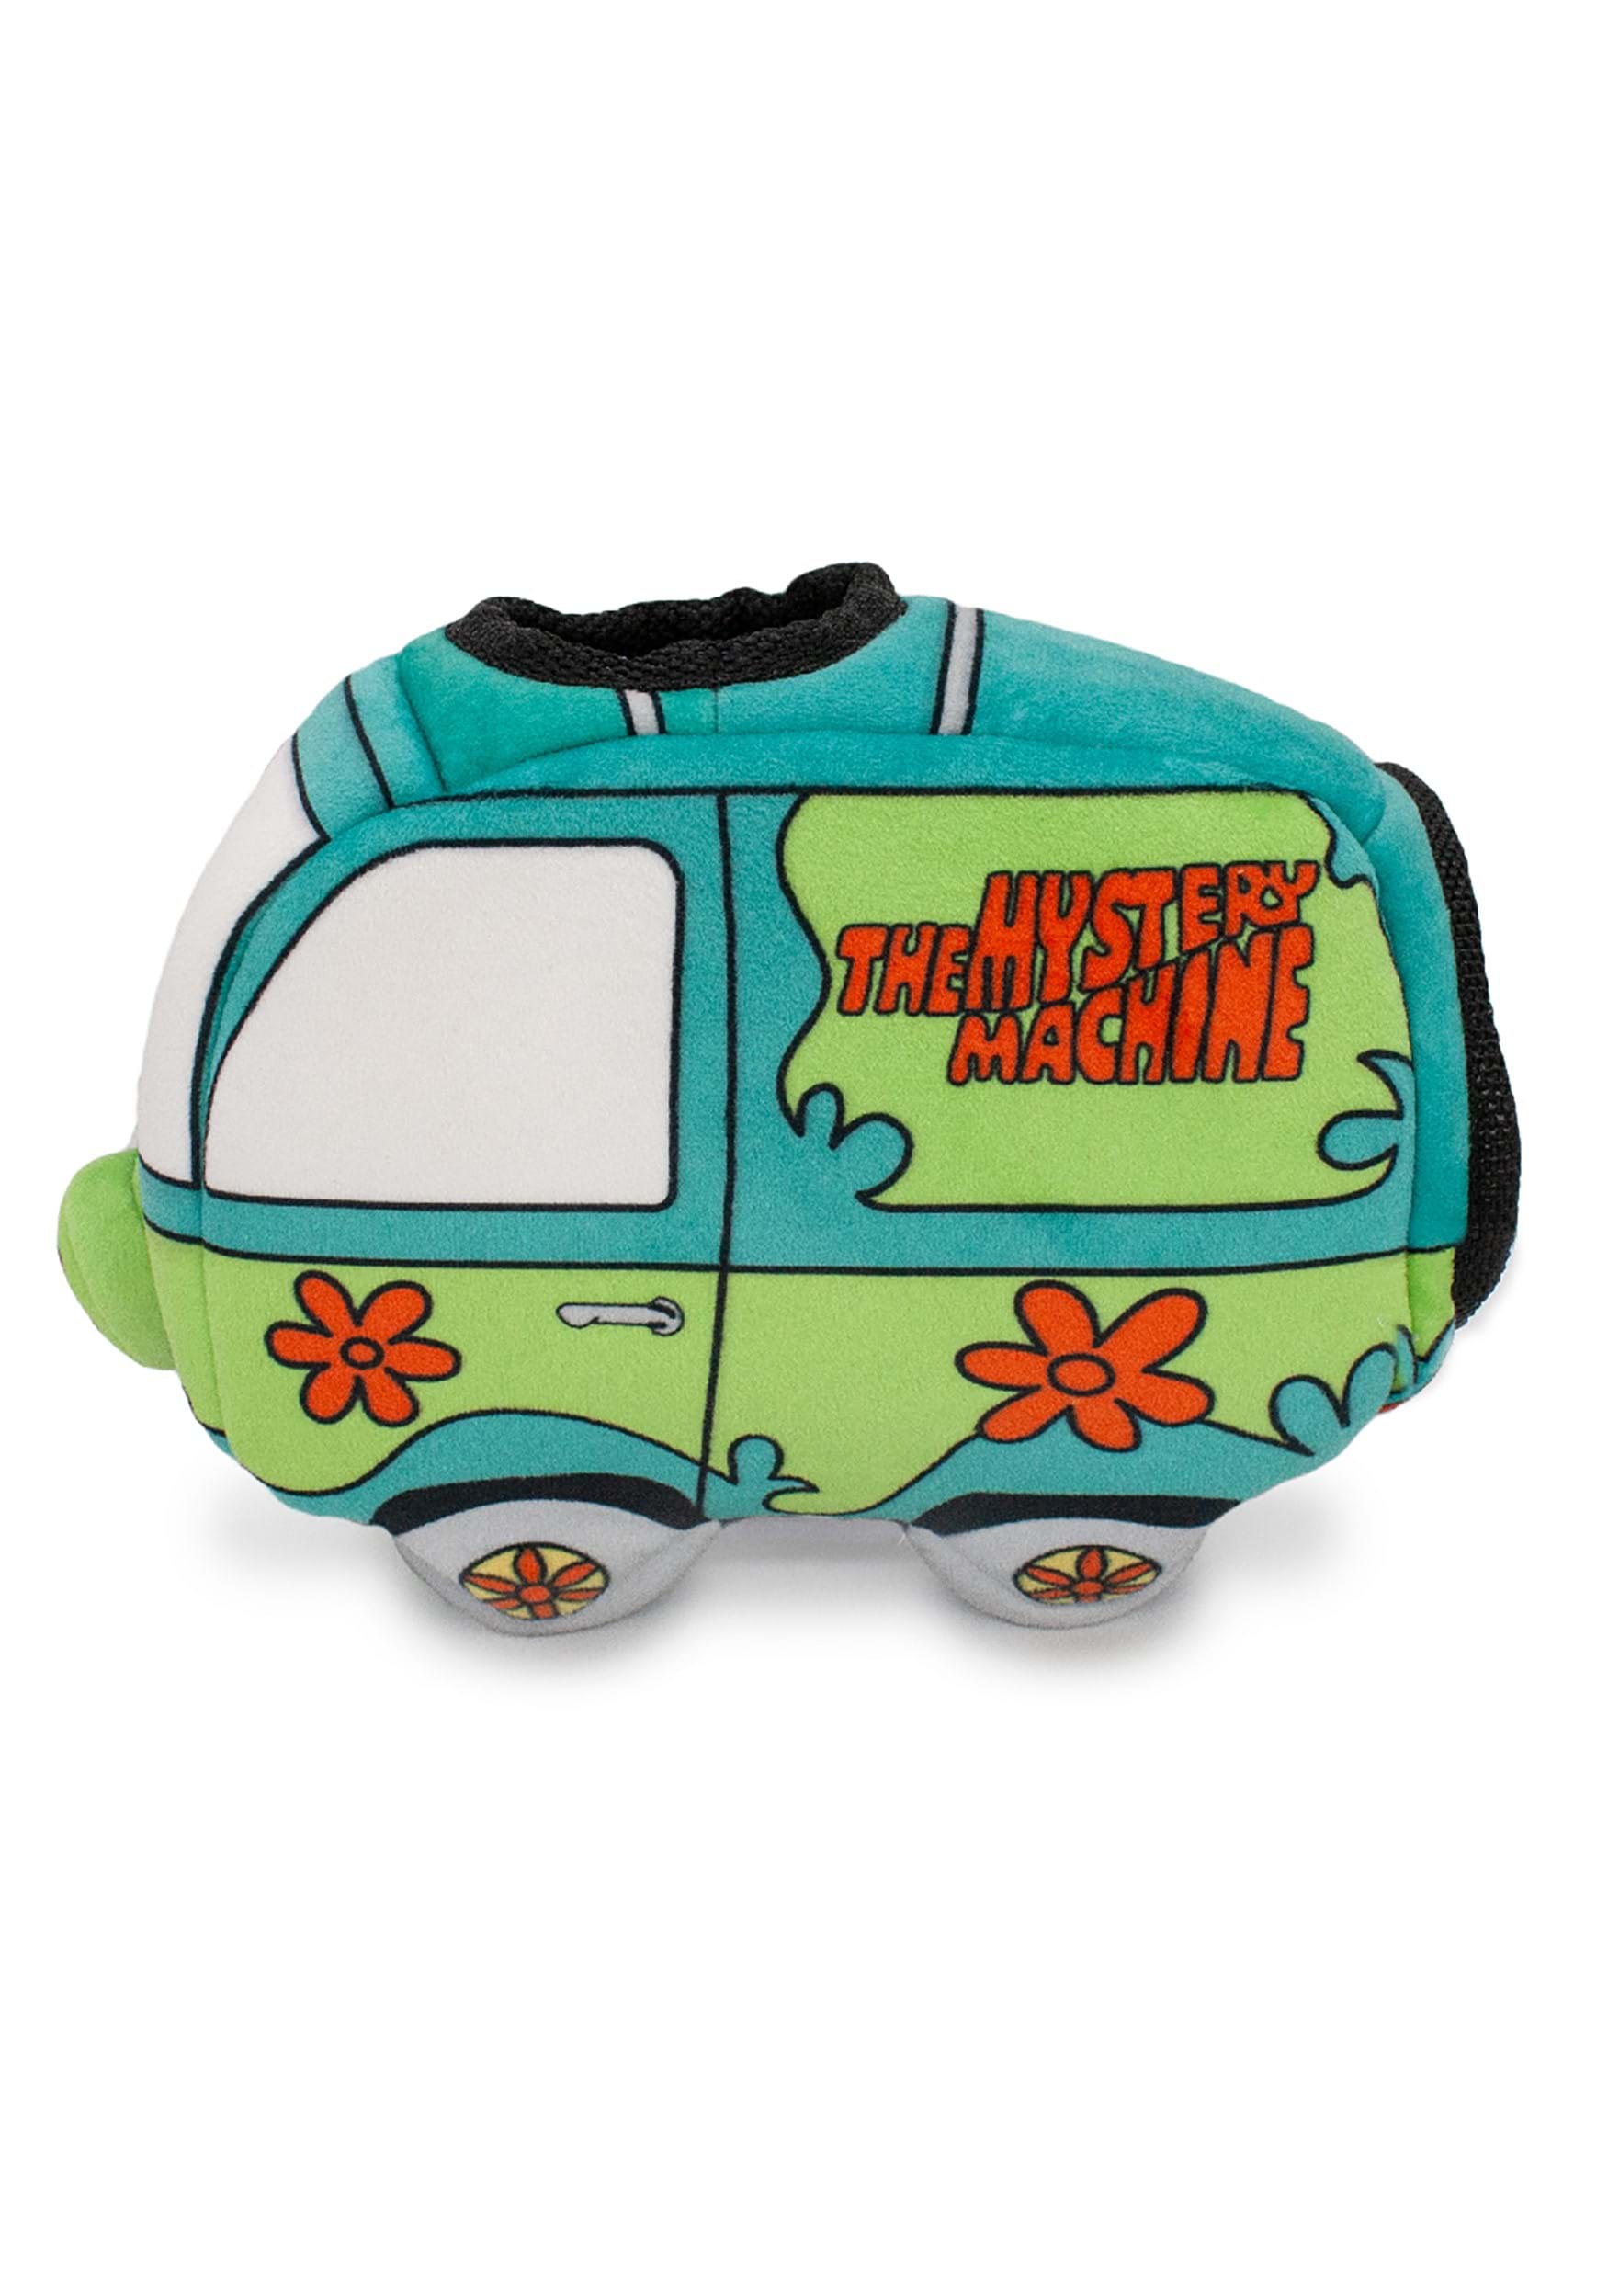 The Mystery Machine Van, Vintage Scooby Doo Toy, Mystery Machine Van Toy,  Scooby Doo Toys, Scooby Doo Toy, Scooby Doo, Mystery Machine Toy 